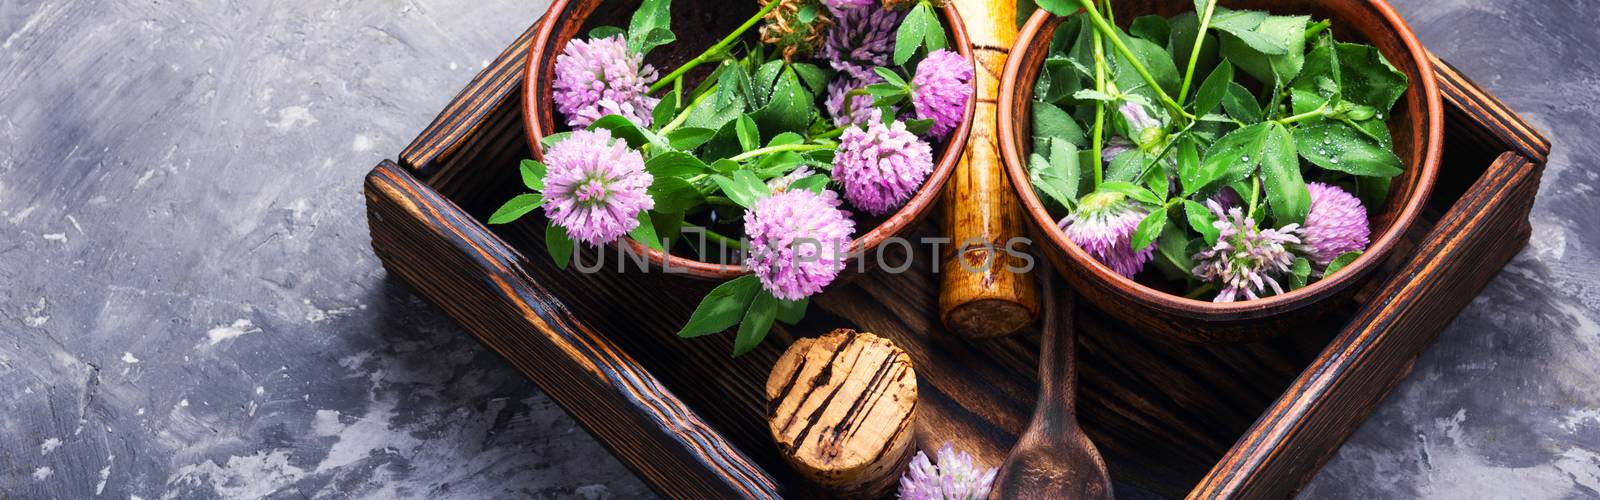 Healing plant clover by LMykola